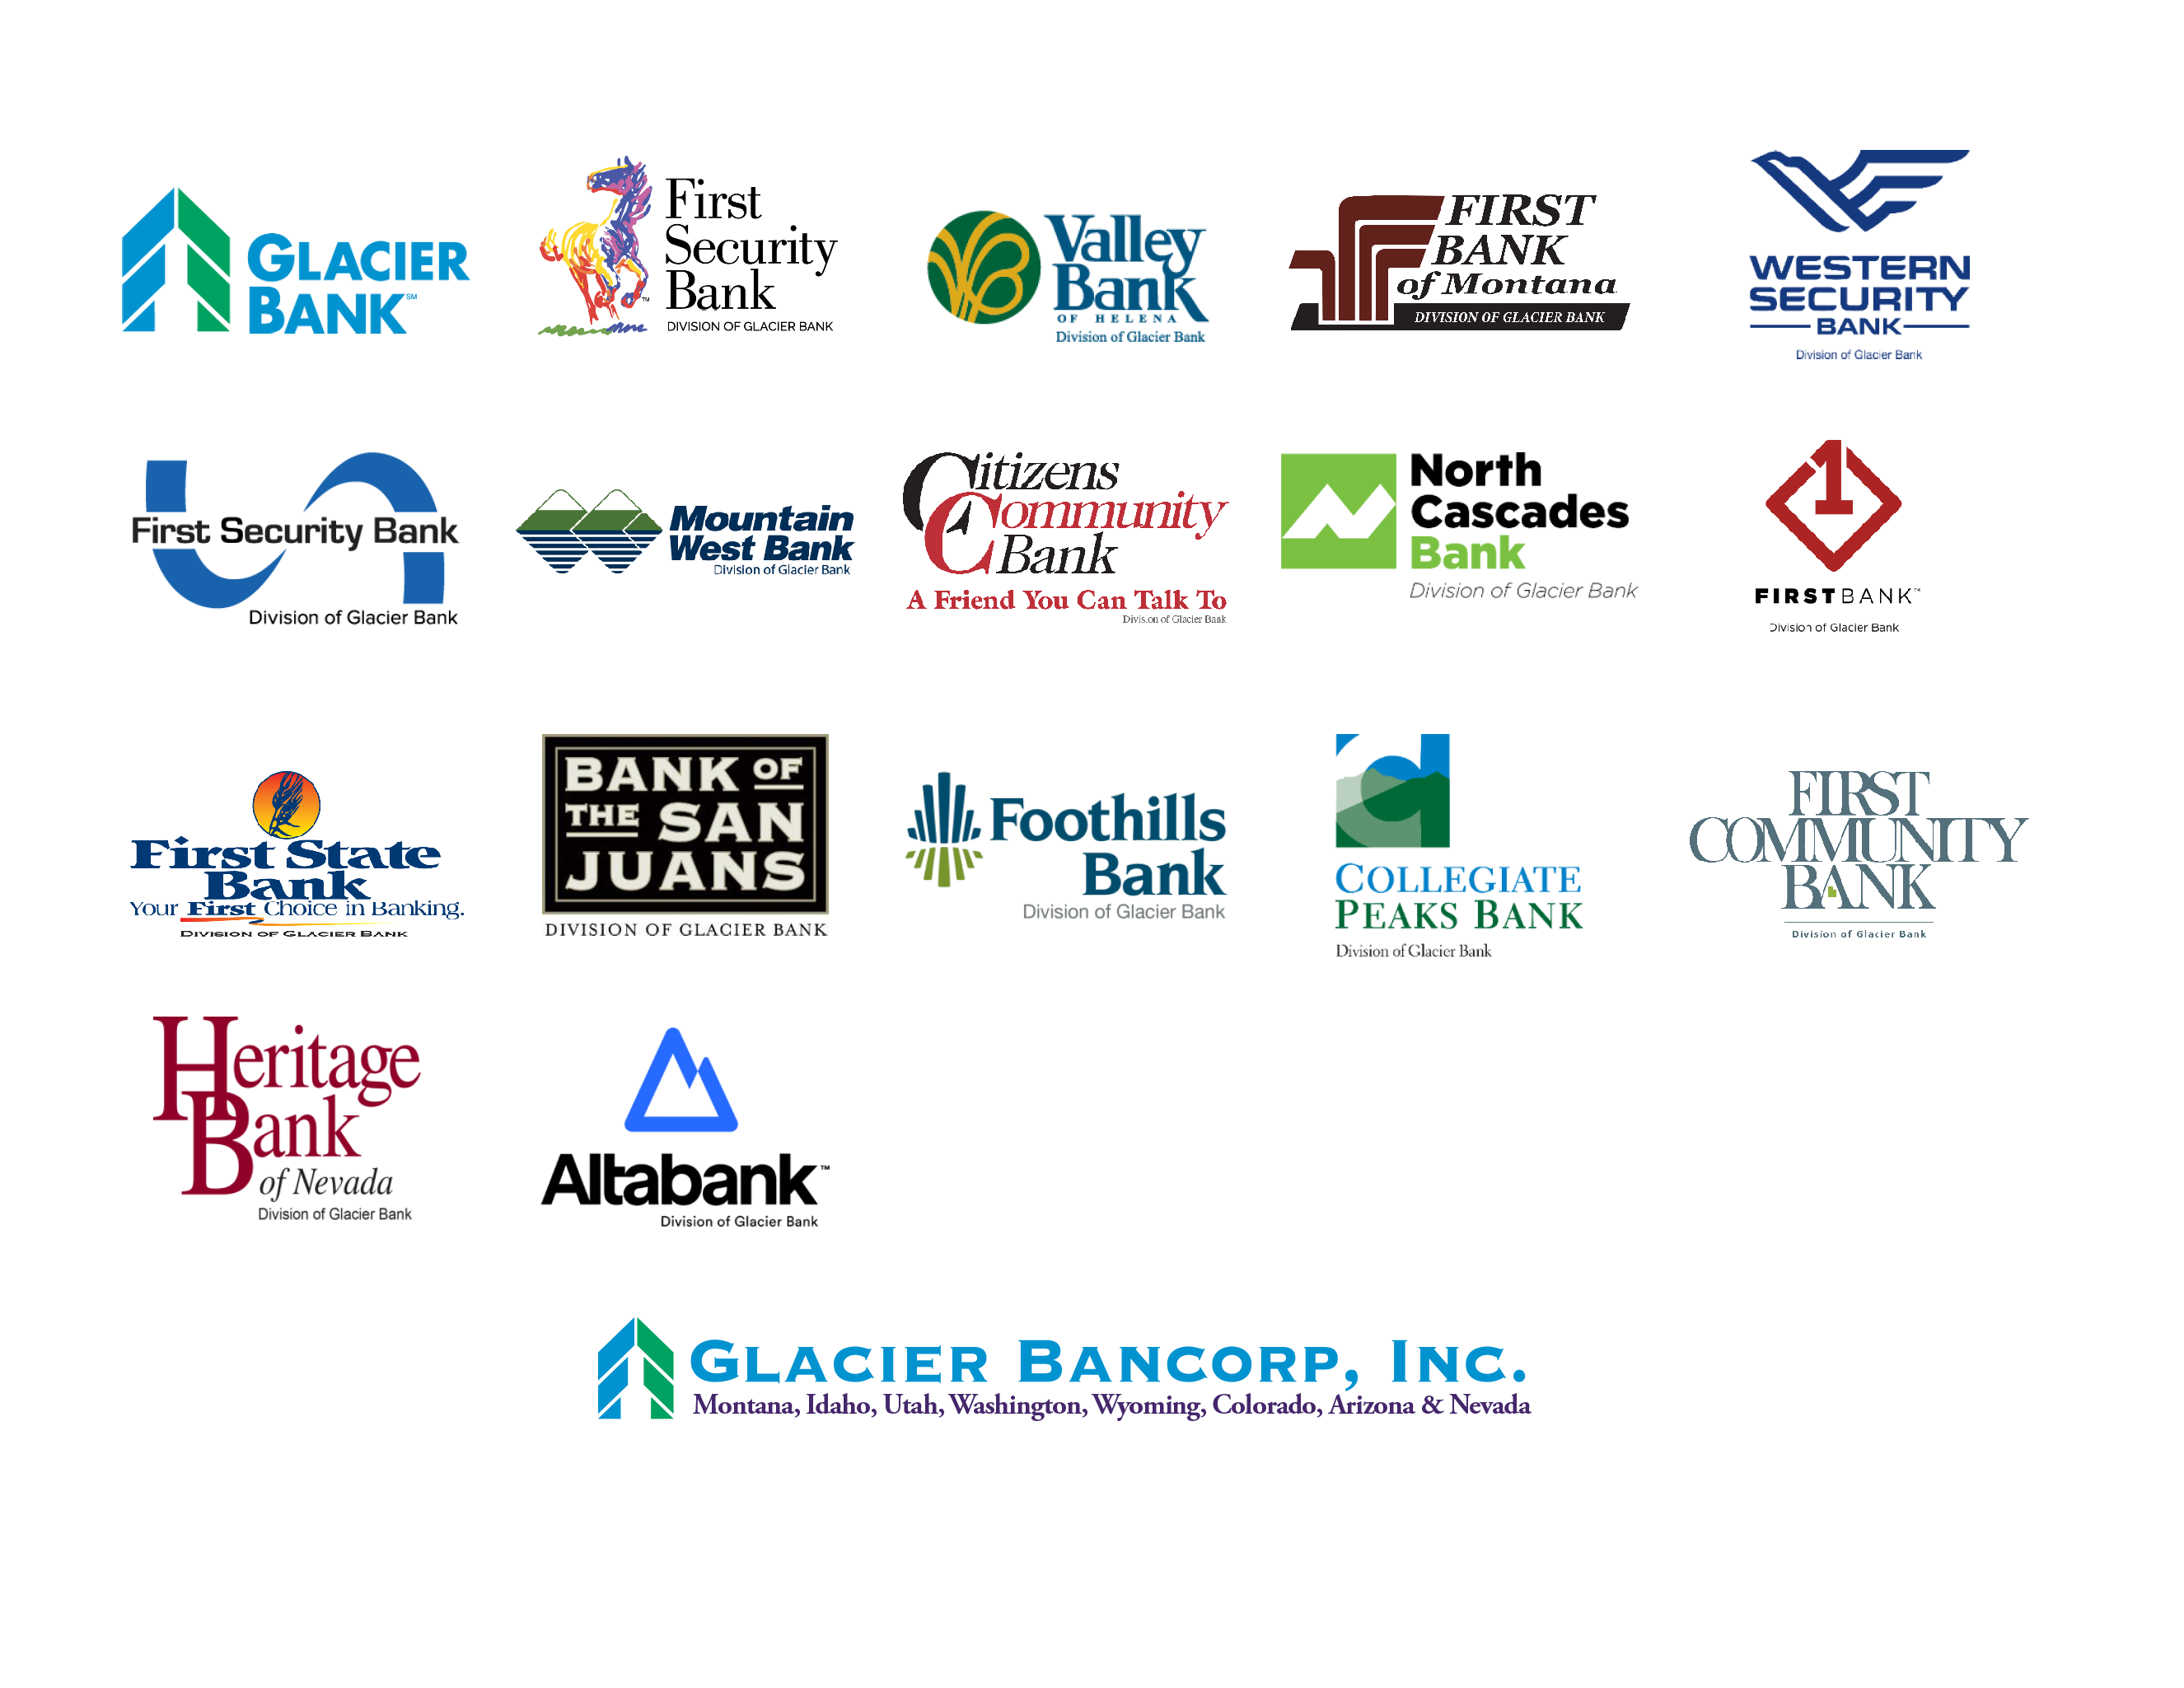 Glacier Bancorp Family of Banks logos.